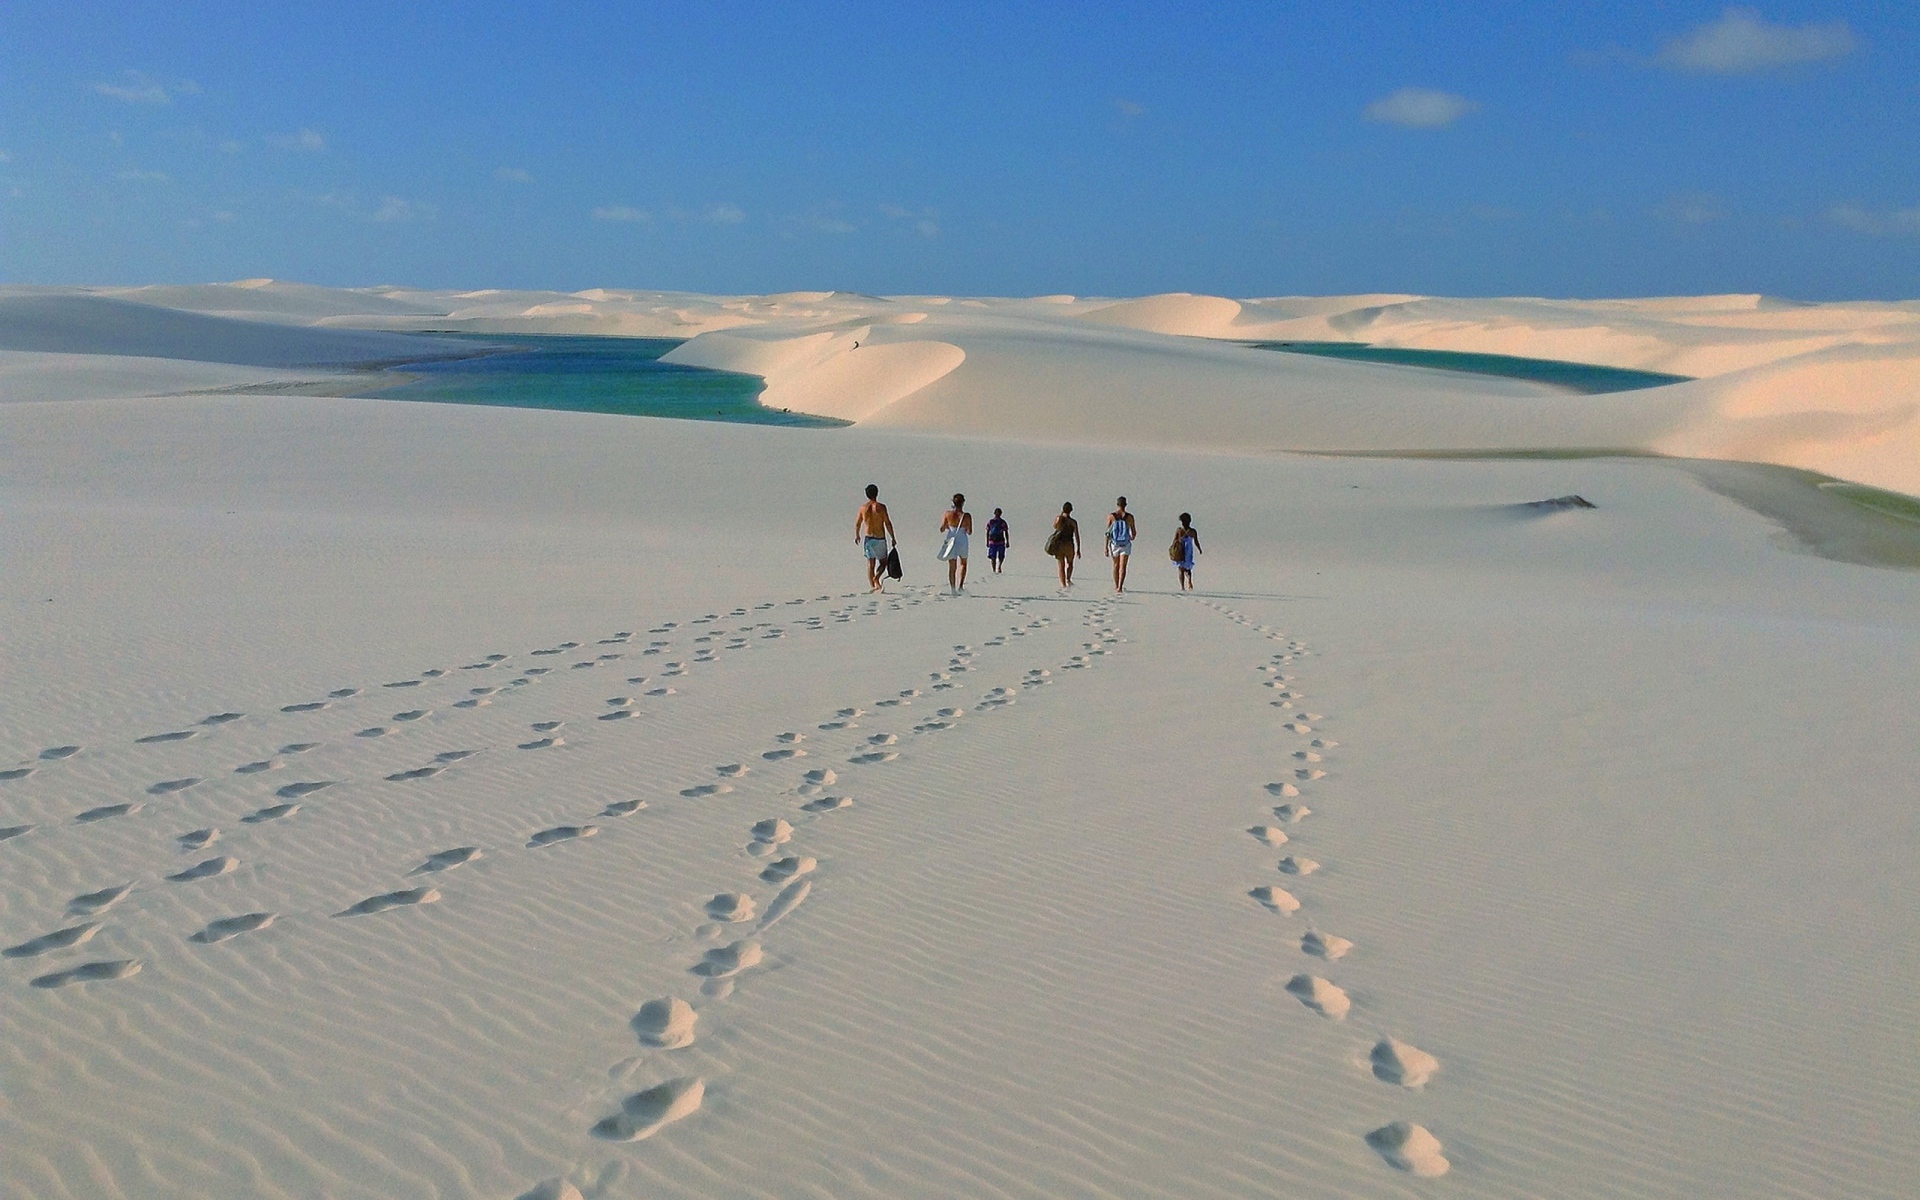 	 Footprints in the sand in Brazil